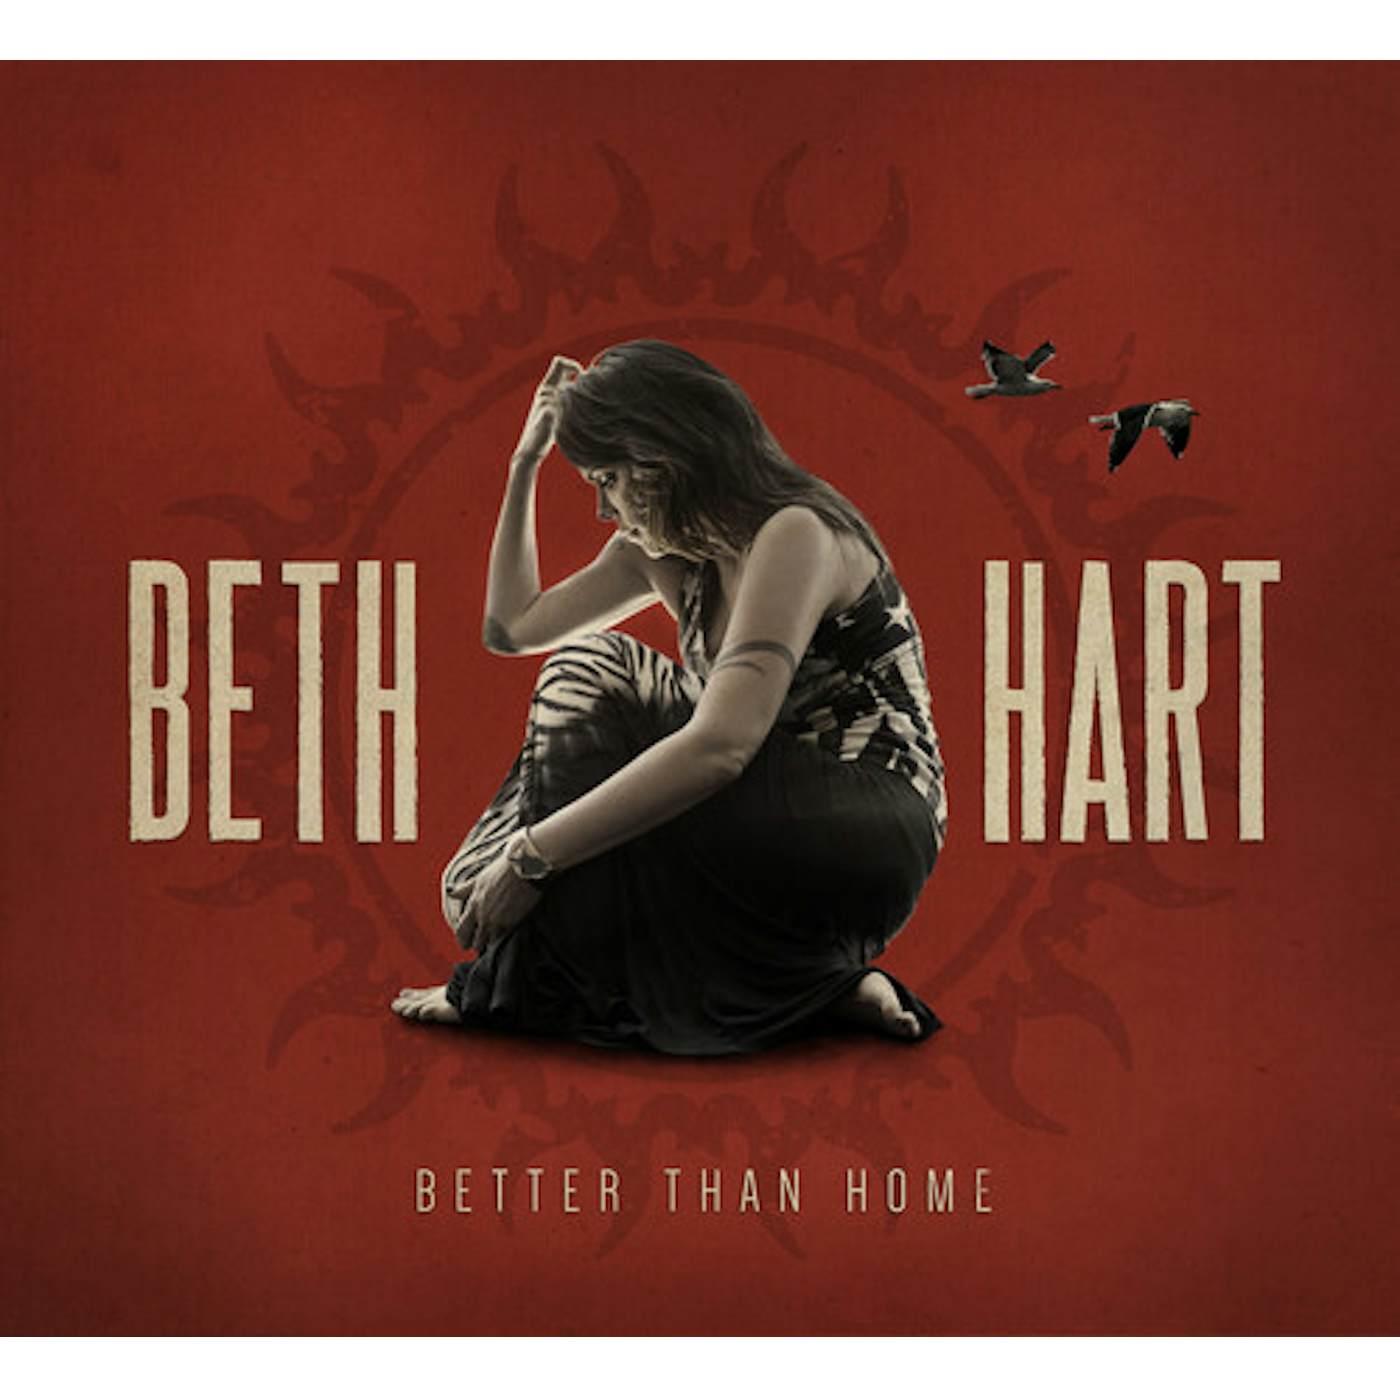 Beth Hart BETTER THAN HOME (TRANSPARENT) Vinyl Record